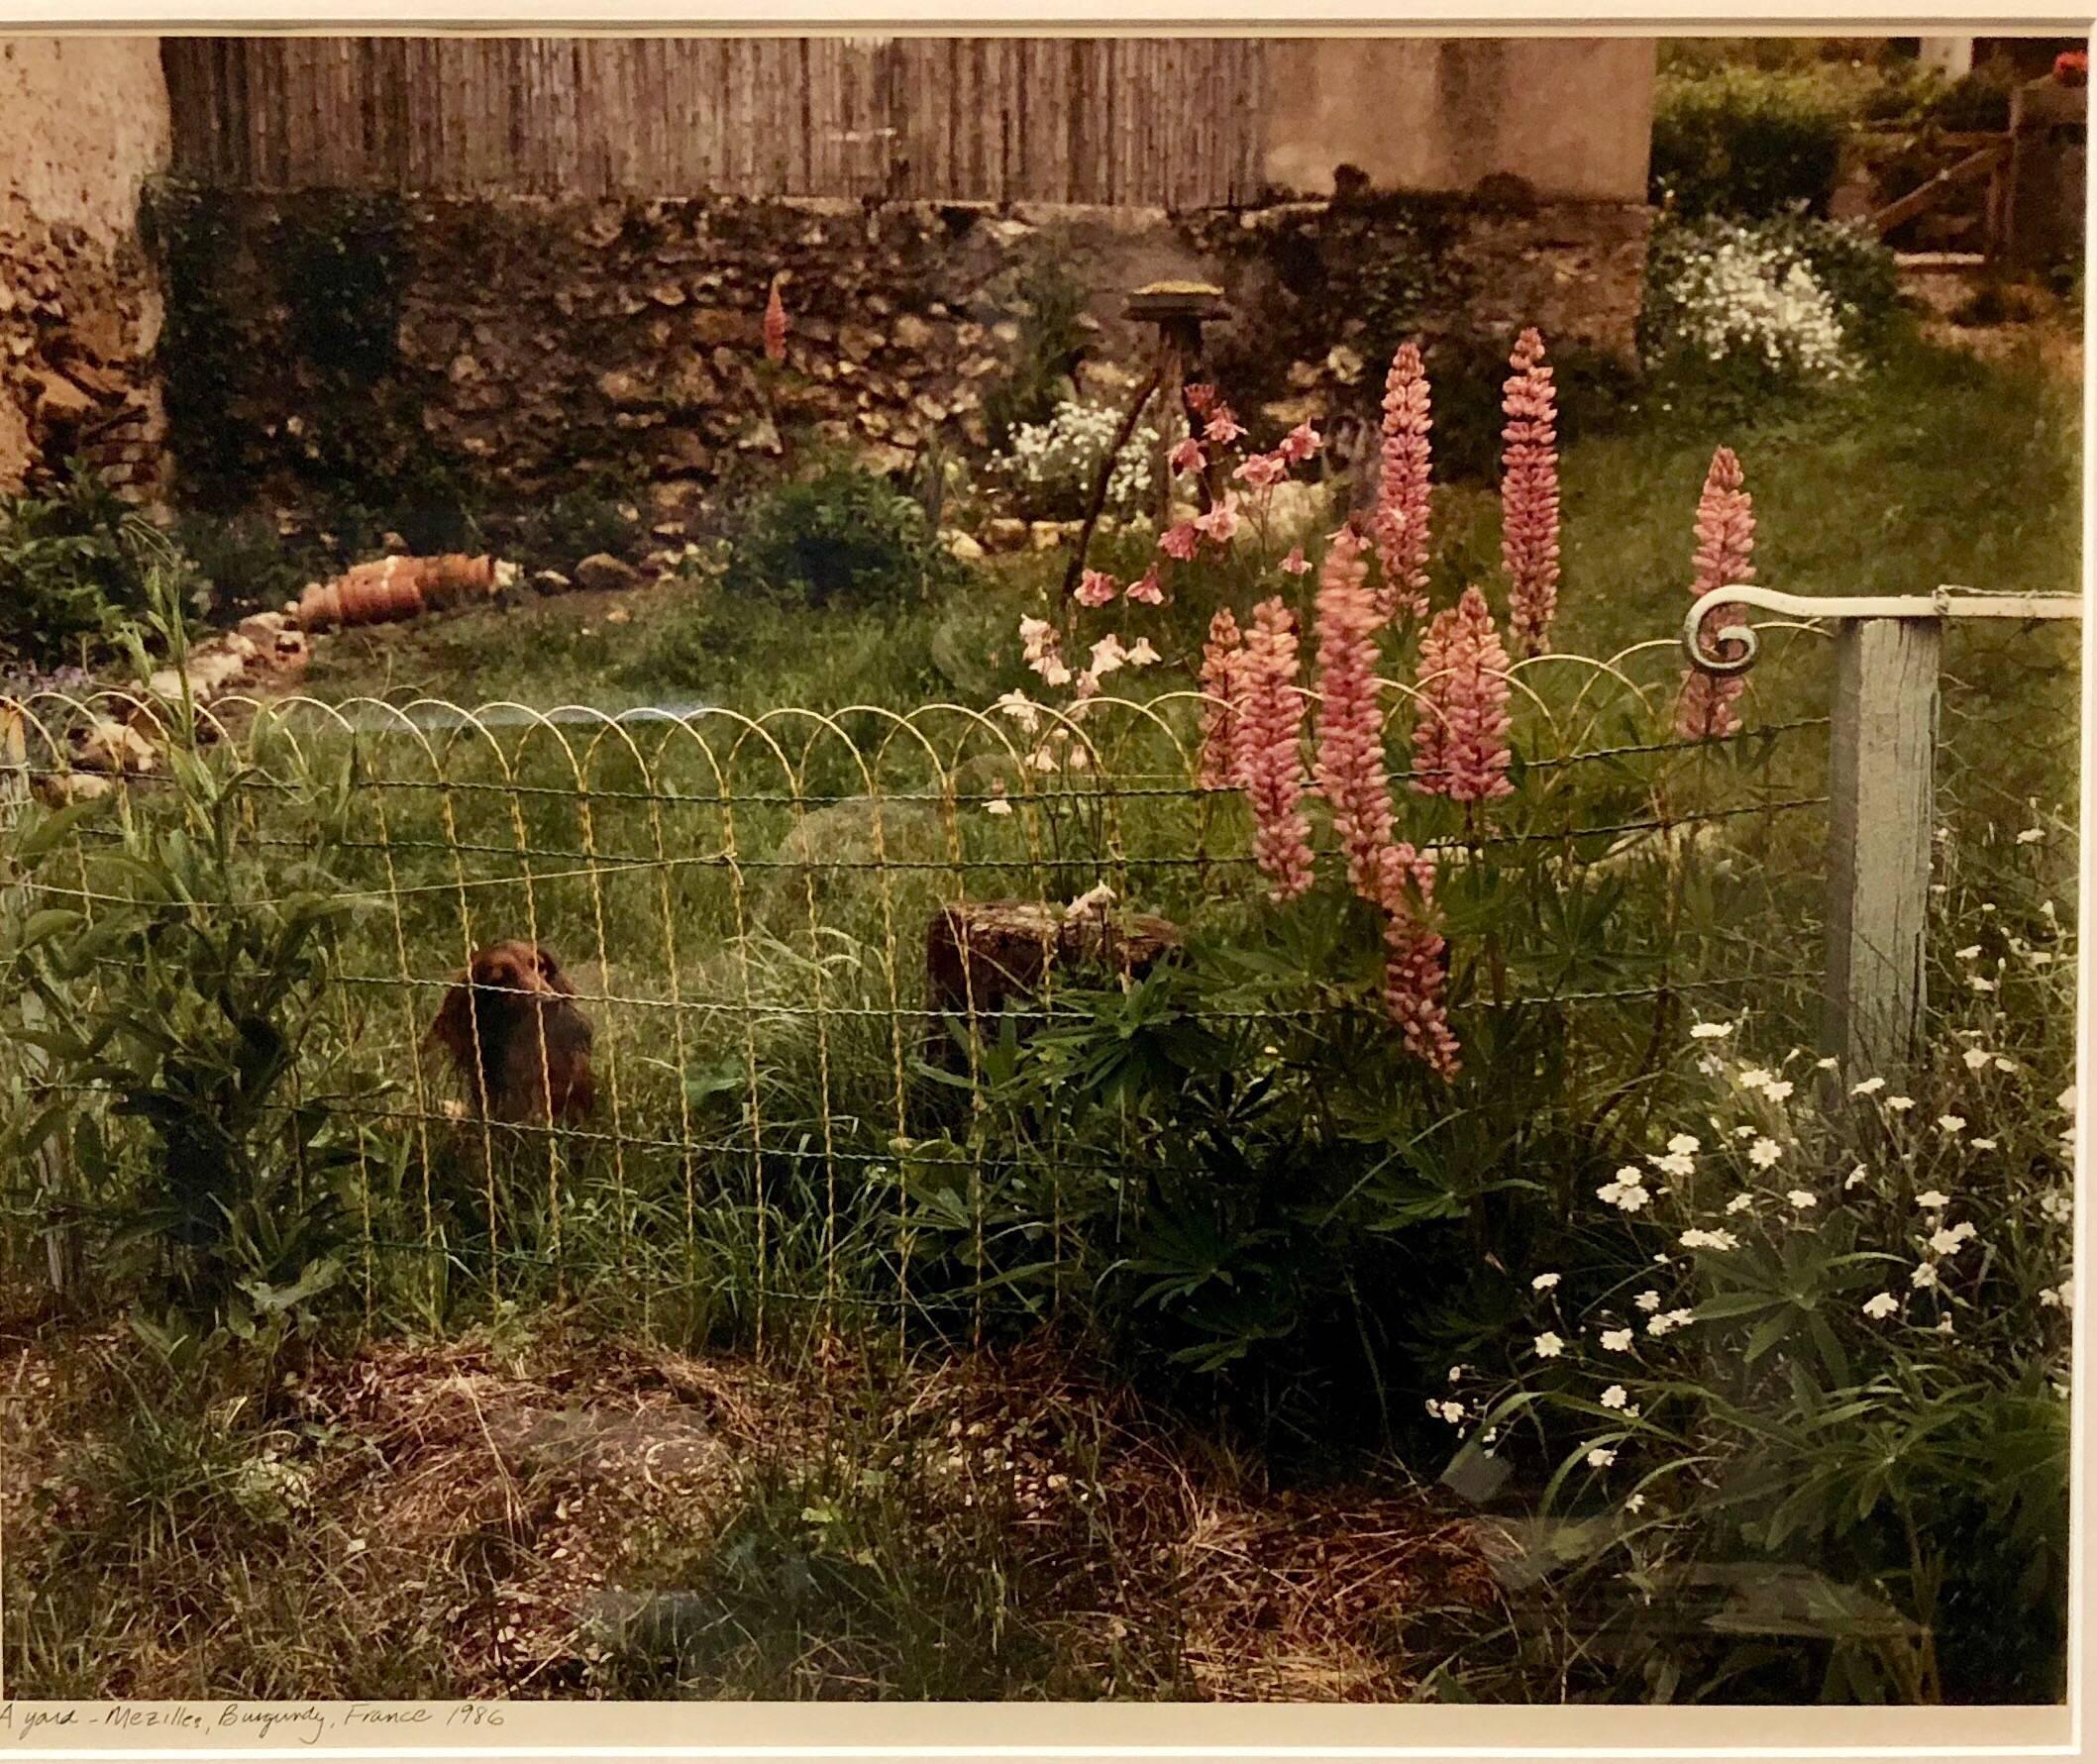 Frank Gohlke Landscape Photograph - A Yard, Mezilles Burgundy France. Field Of Flowers 1986 Vintage Color Photograph